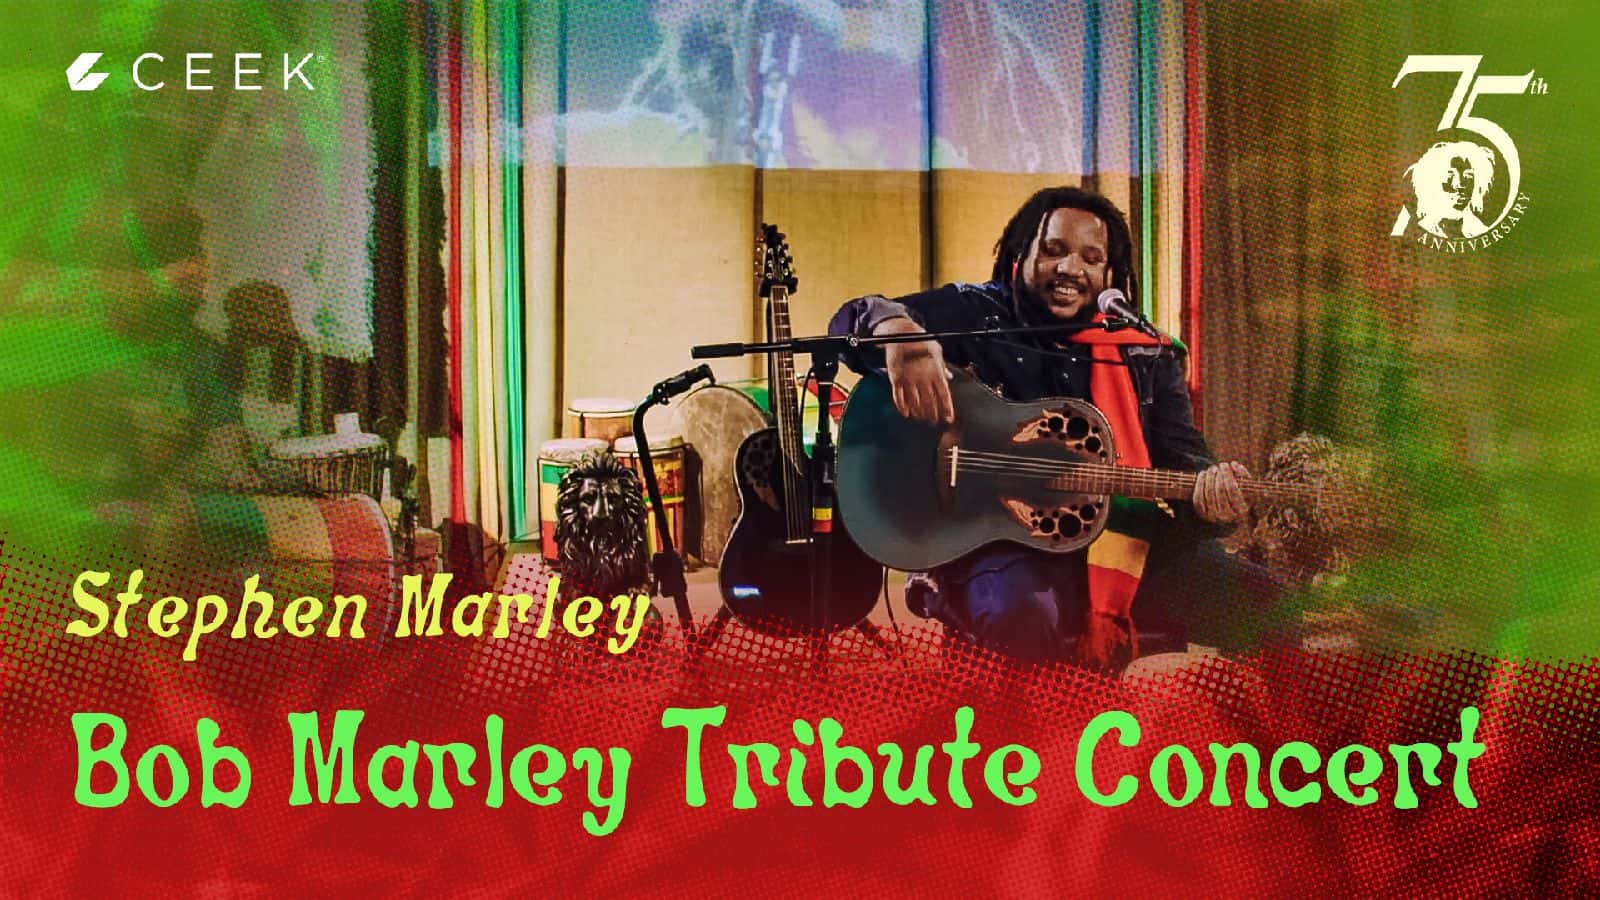 Bob Marley 75th Anniversary Tribute Concert